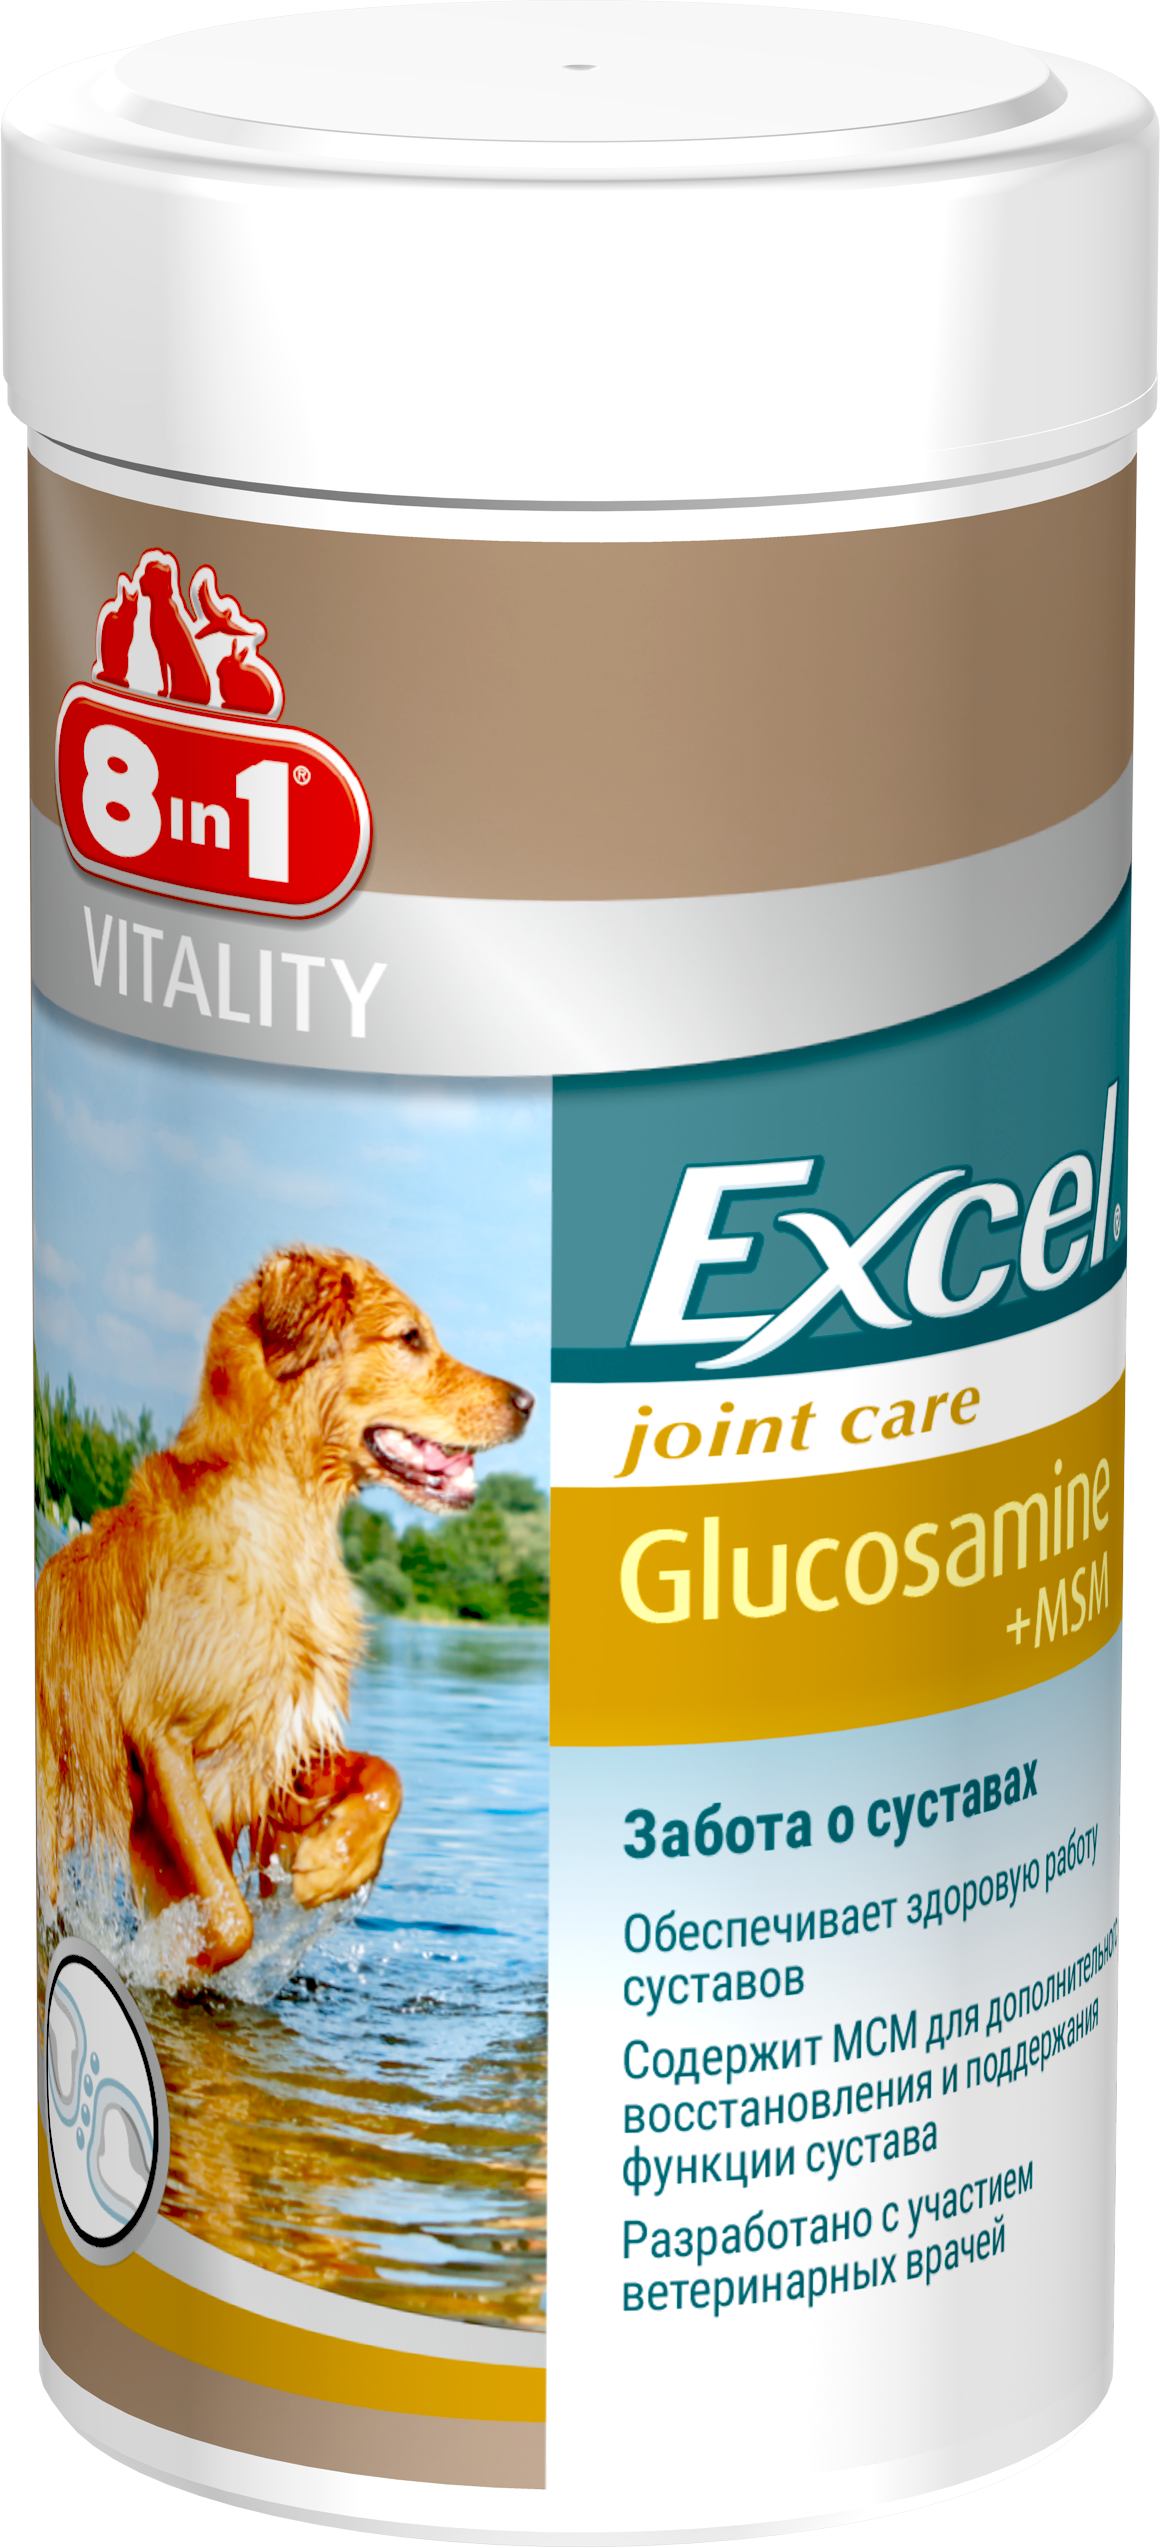 Витамины для собак 8in1 Excel Glucosamine + MSM, 170 г, 55 шт. (661024 /124290 MSM) - фото 1